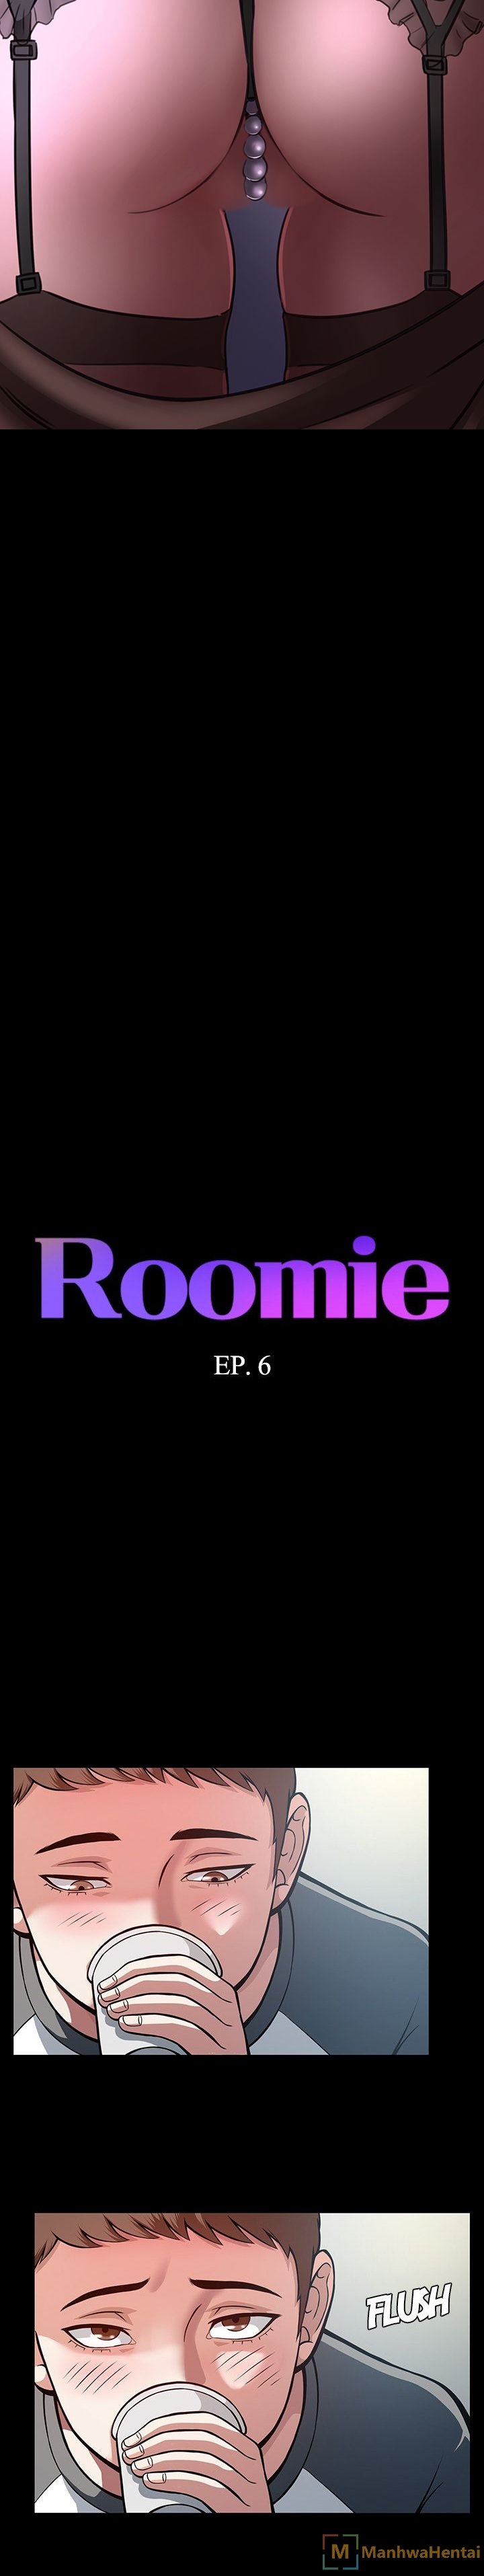 roomie-chap-6-1